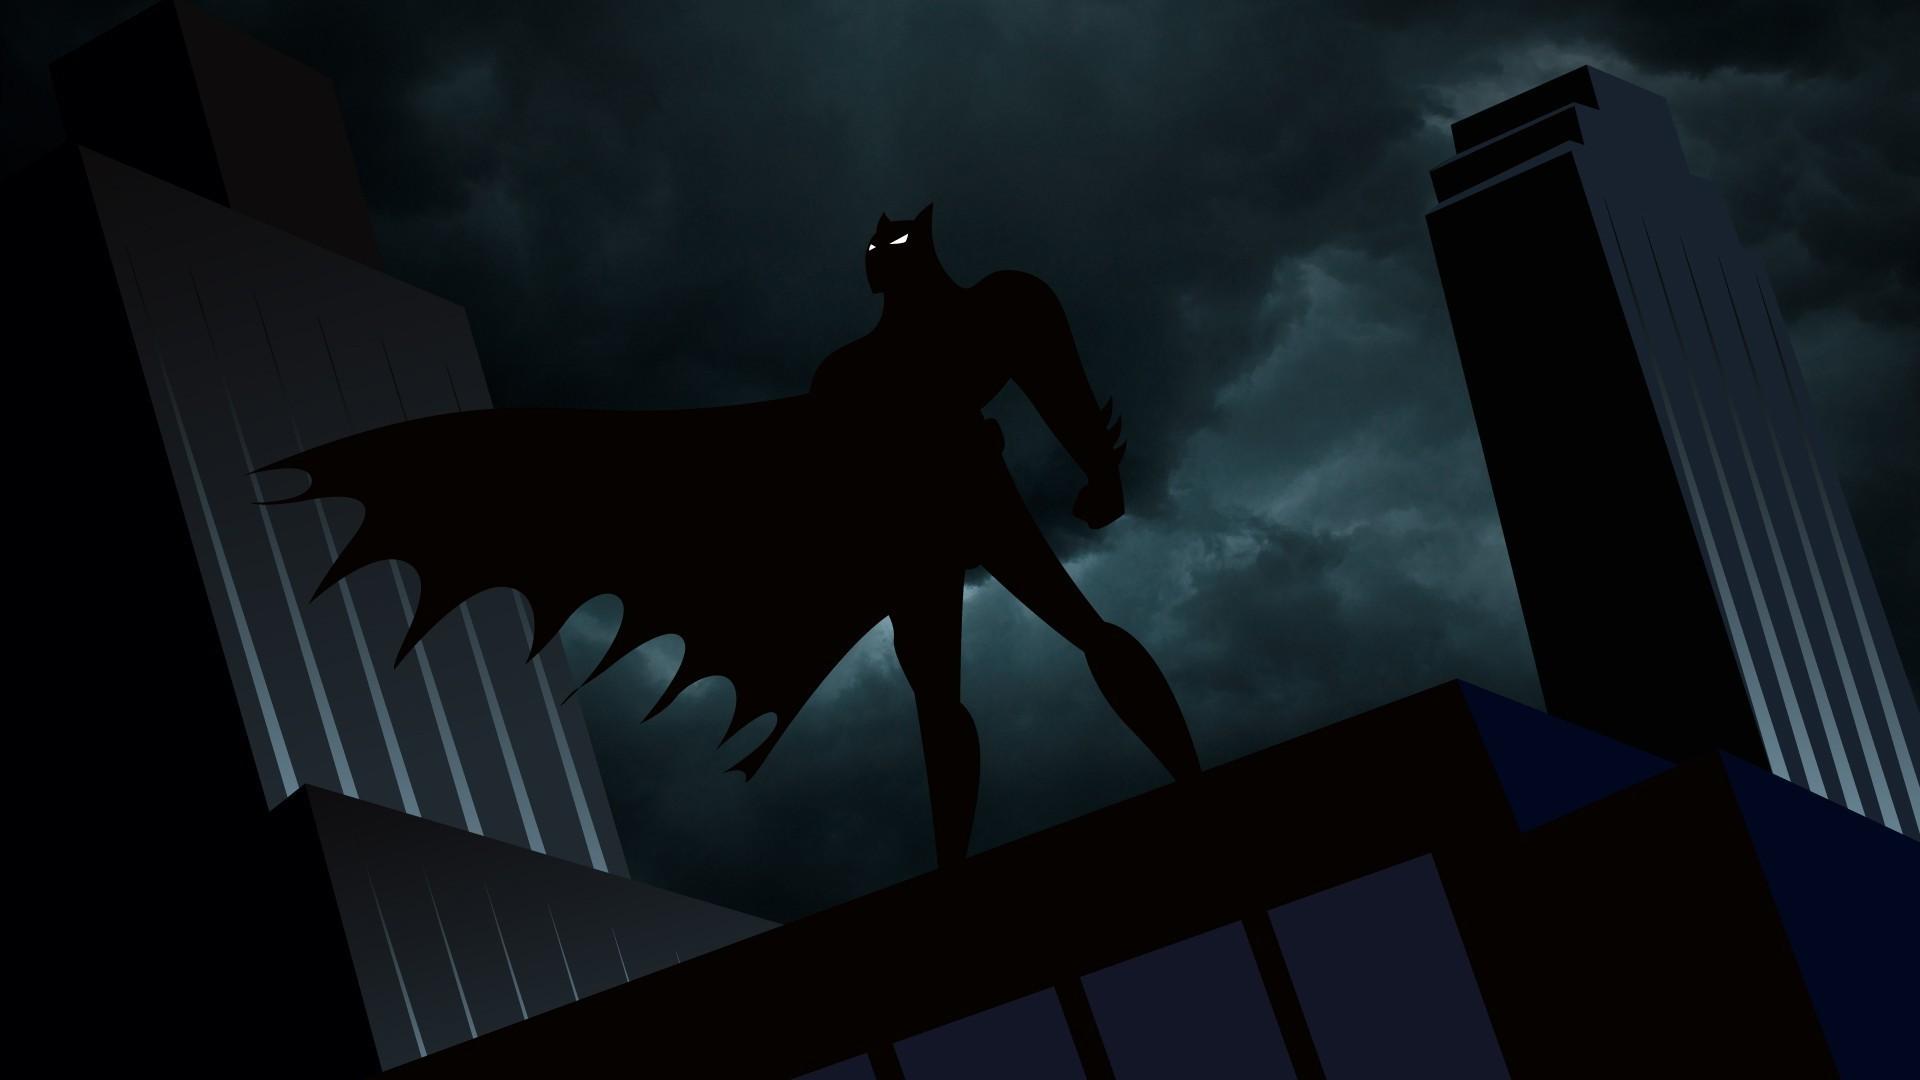 Batman Animated Series Wallpaper